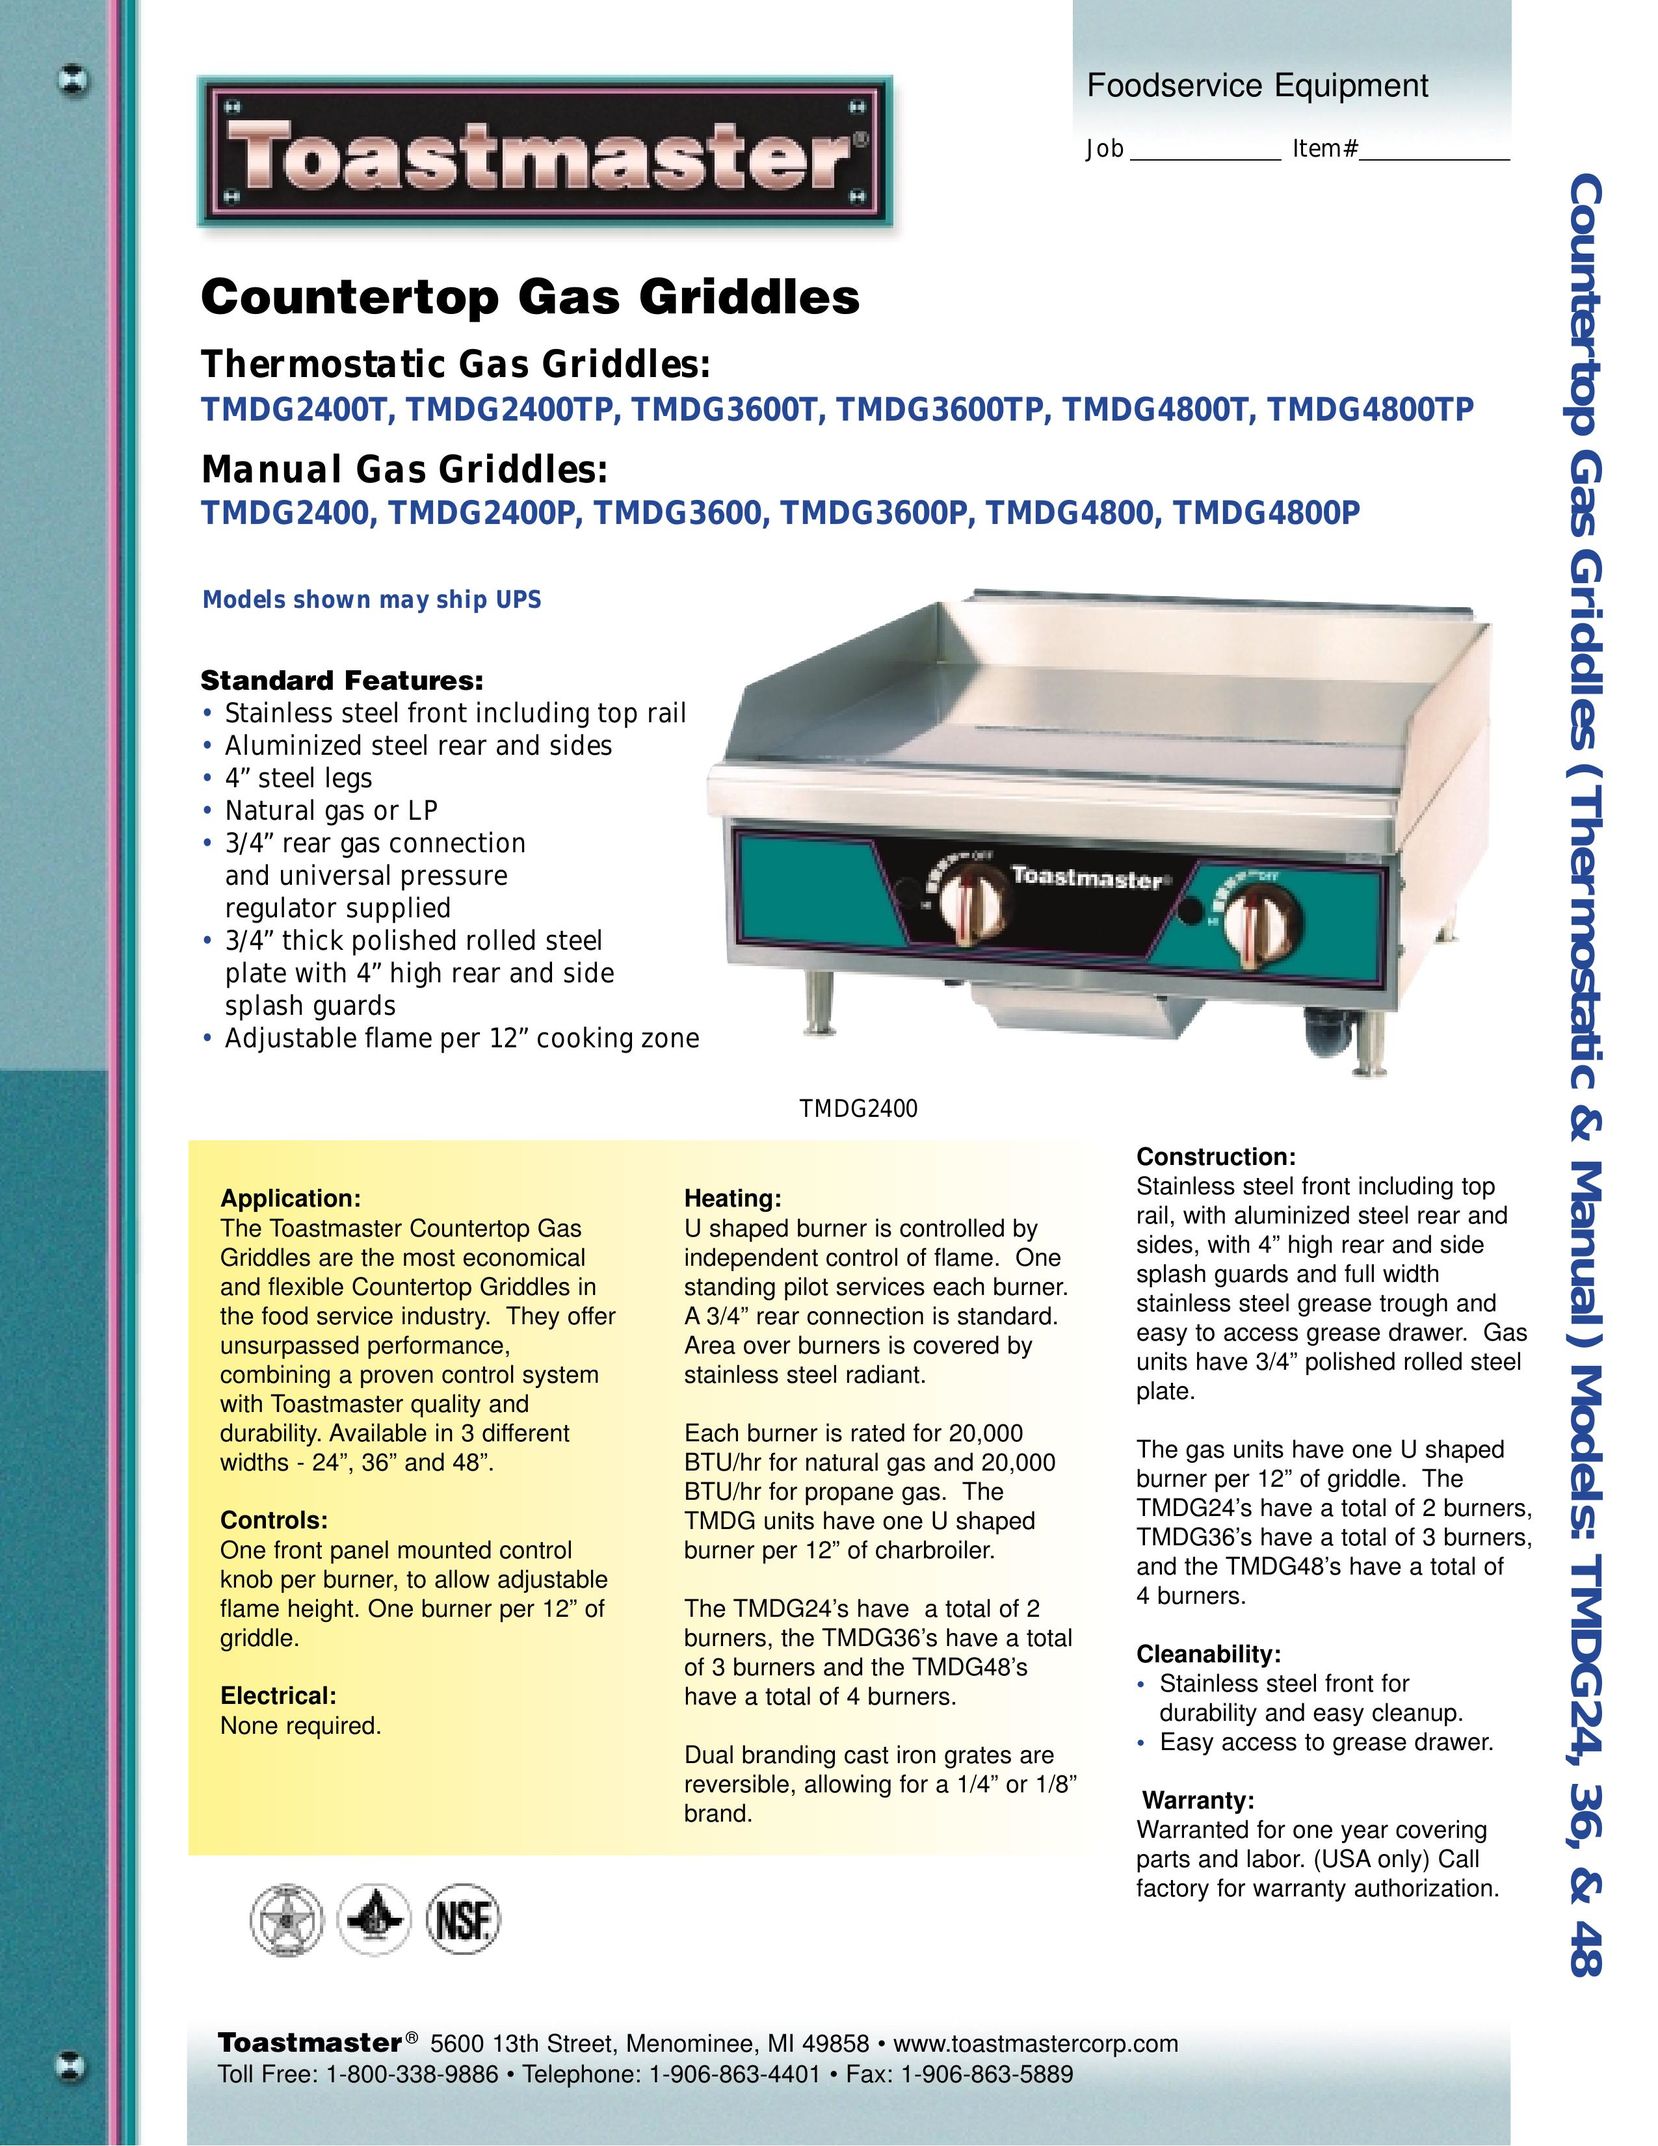 Toastmaster TMDG4800P Griddle User Manual